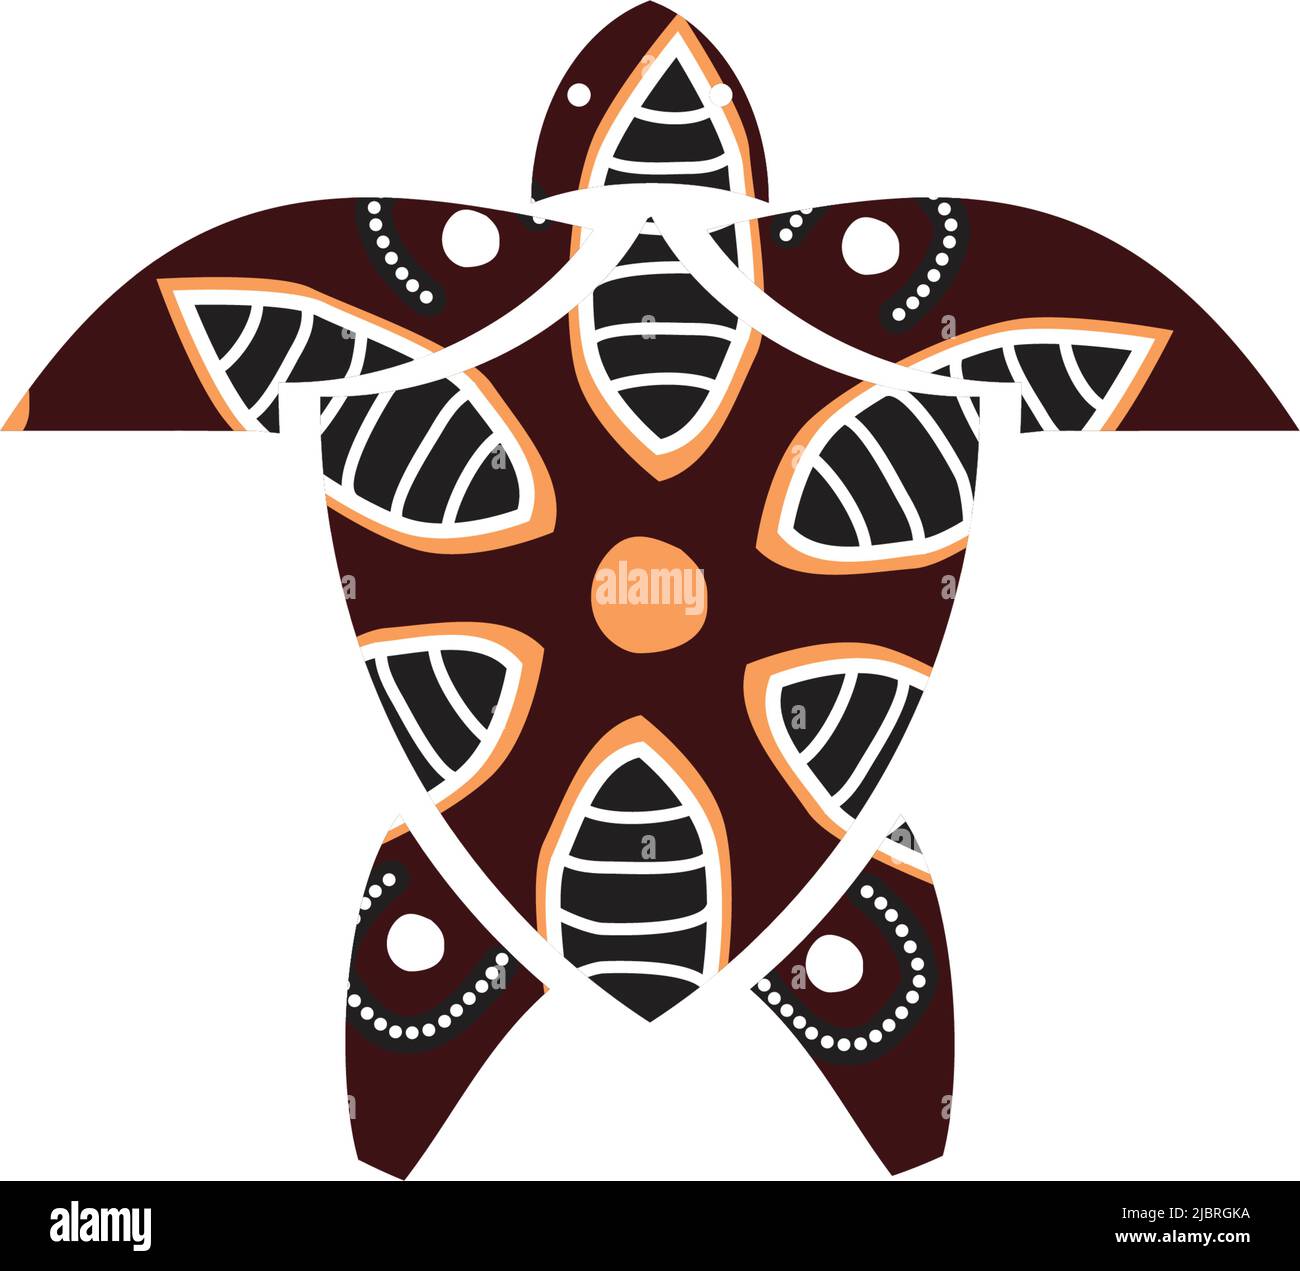 Kangaroo icon with aboriginal art design style vector template Stock Vector